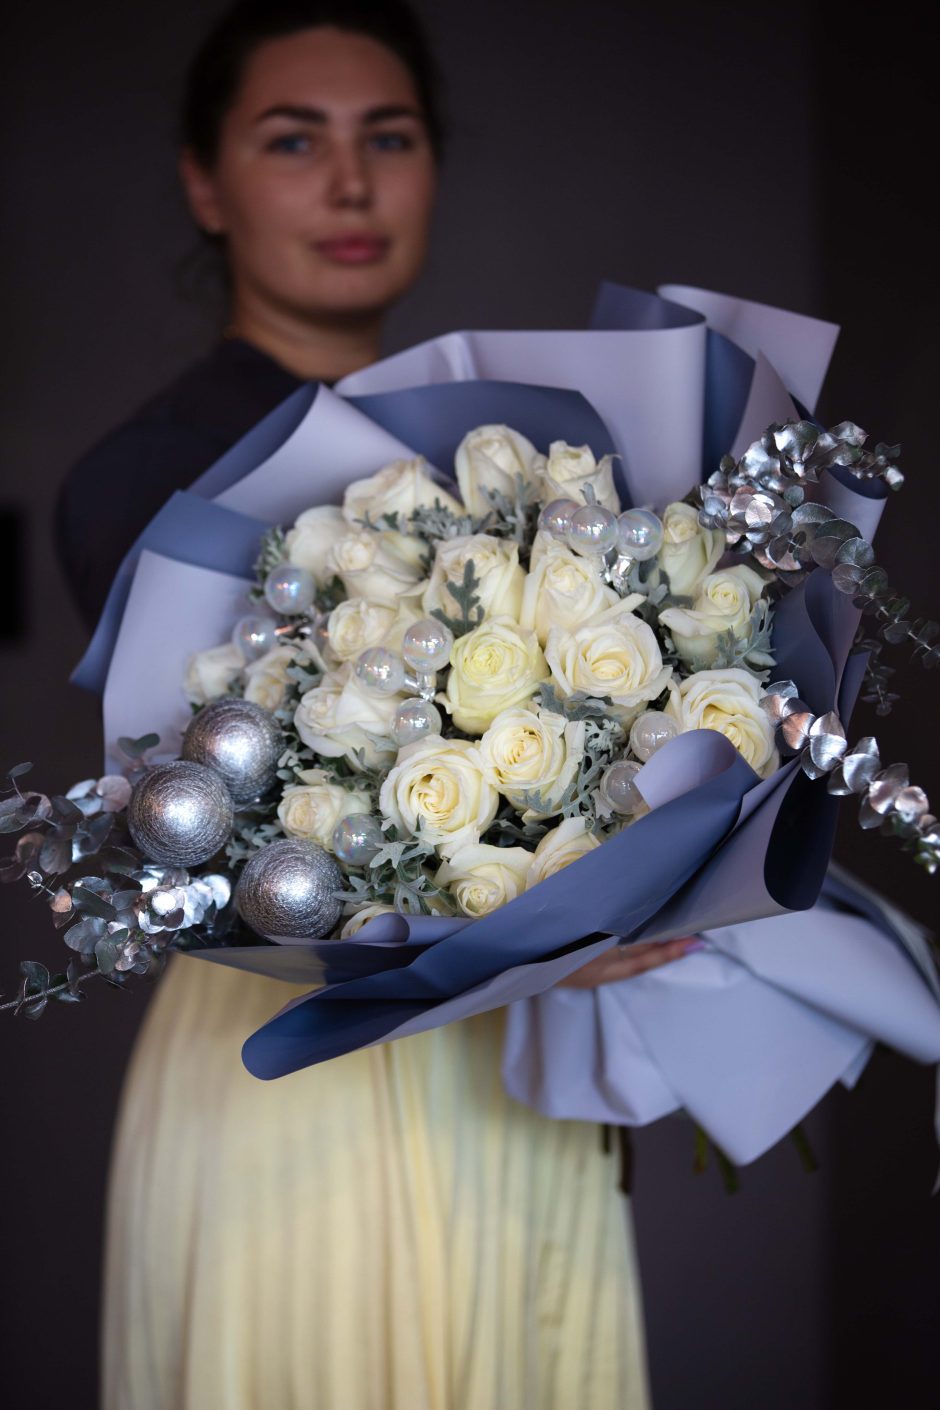 White Rose Ornament, Blue snowflake - 2 dozen White roses with Holliday ornaments - Maison la Fleur